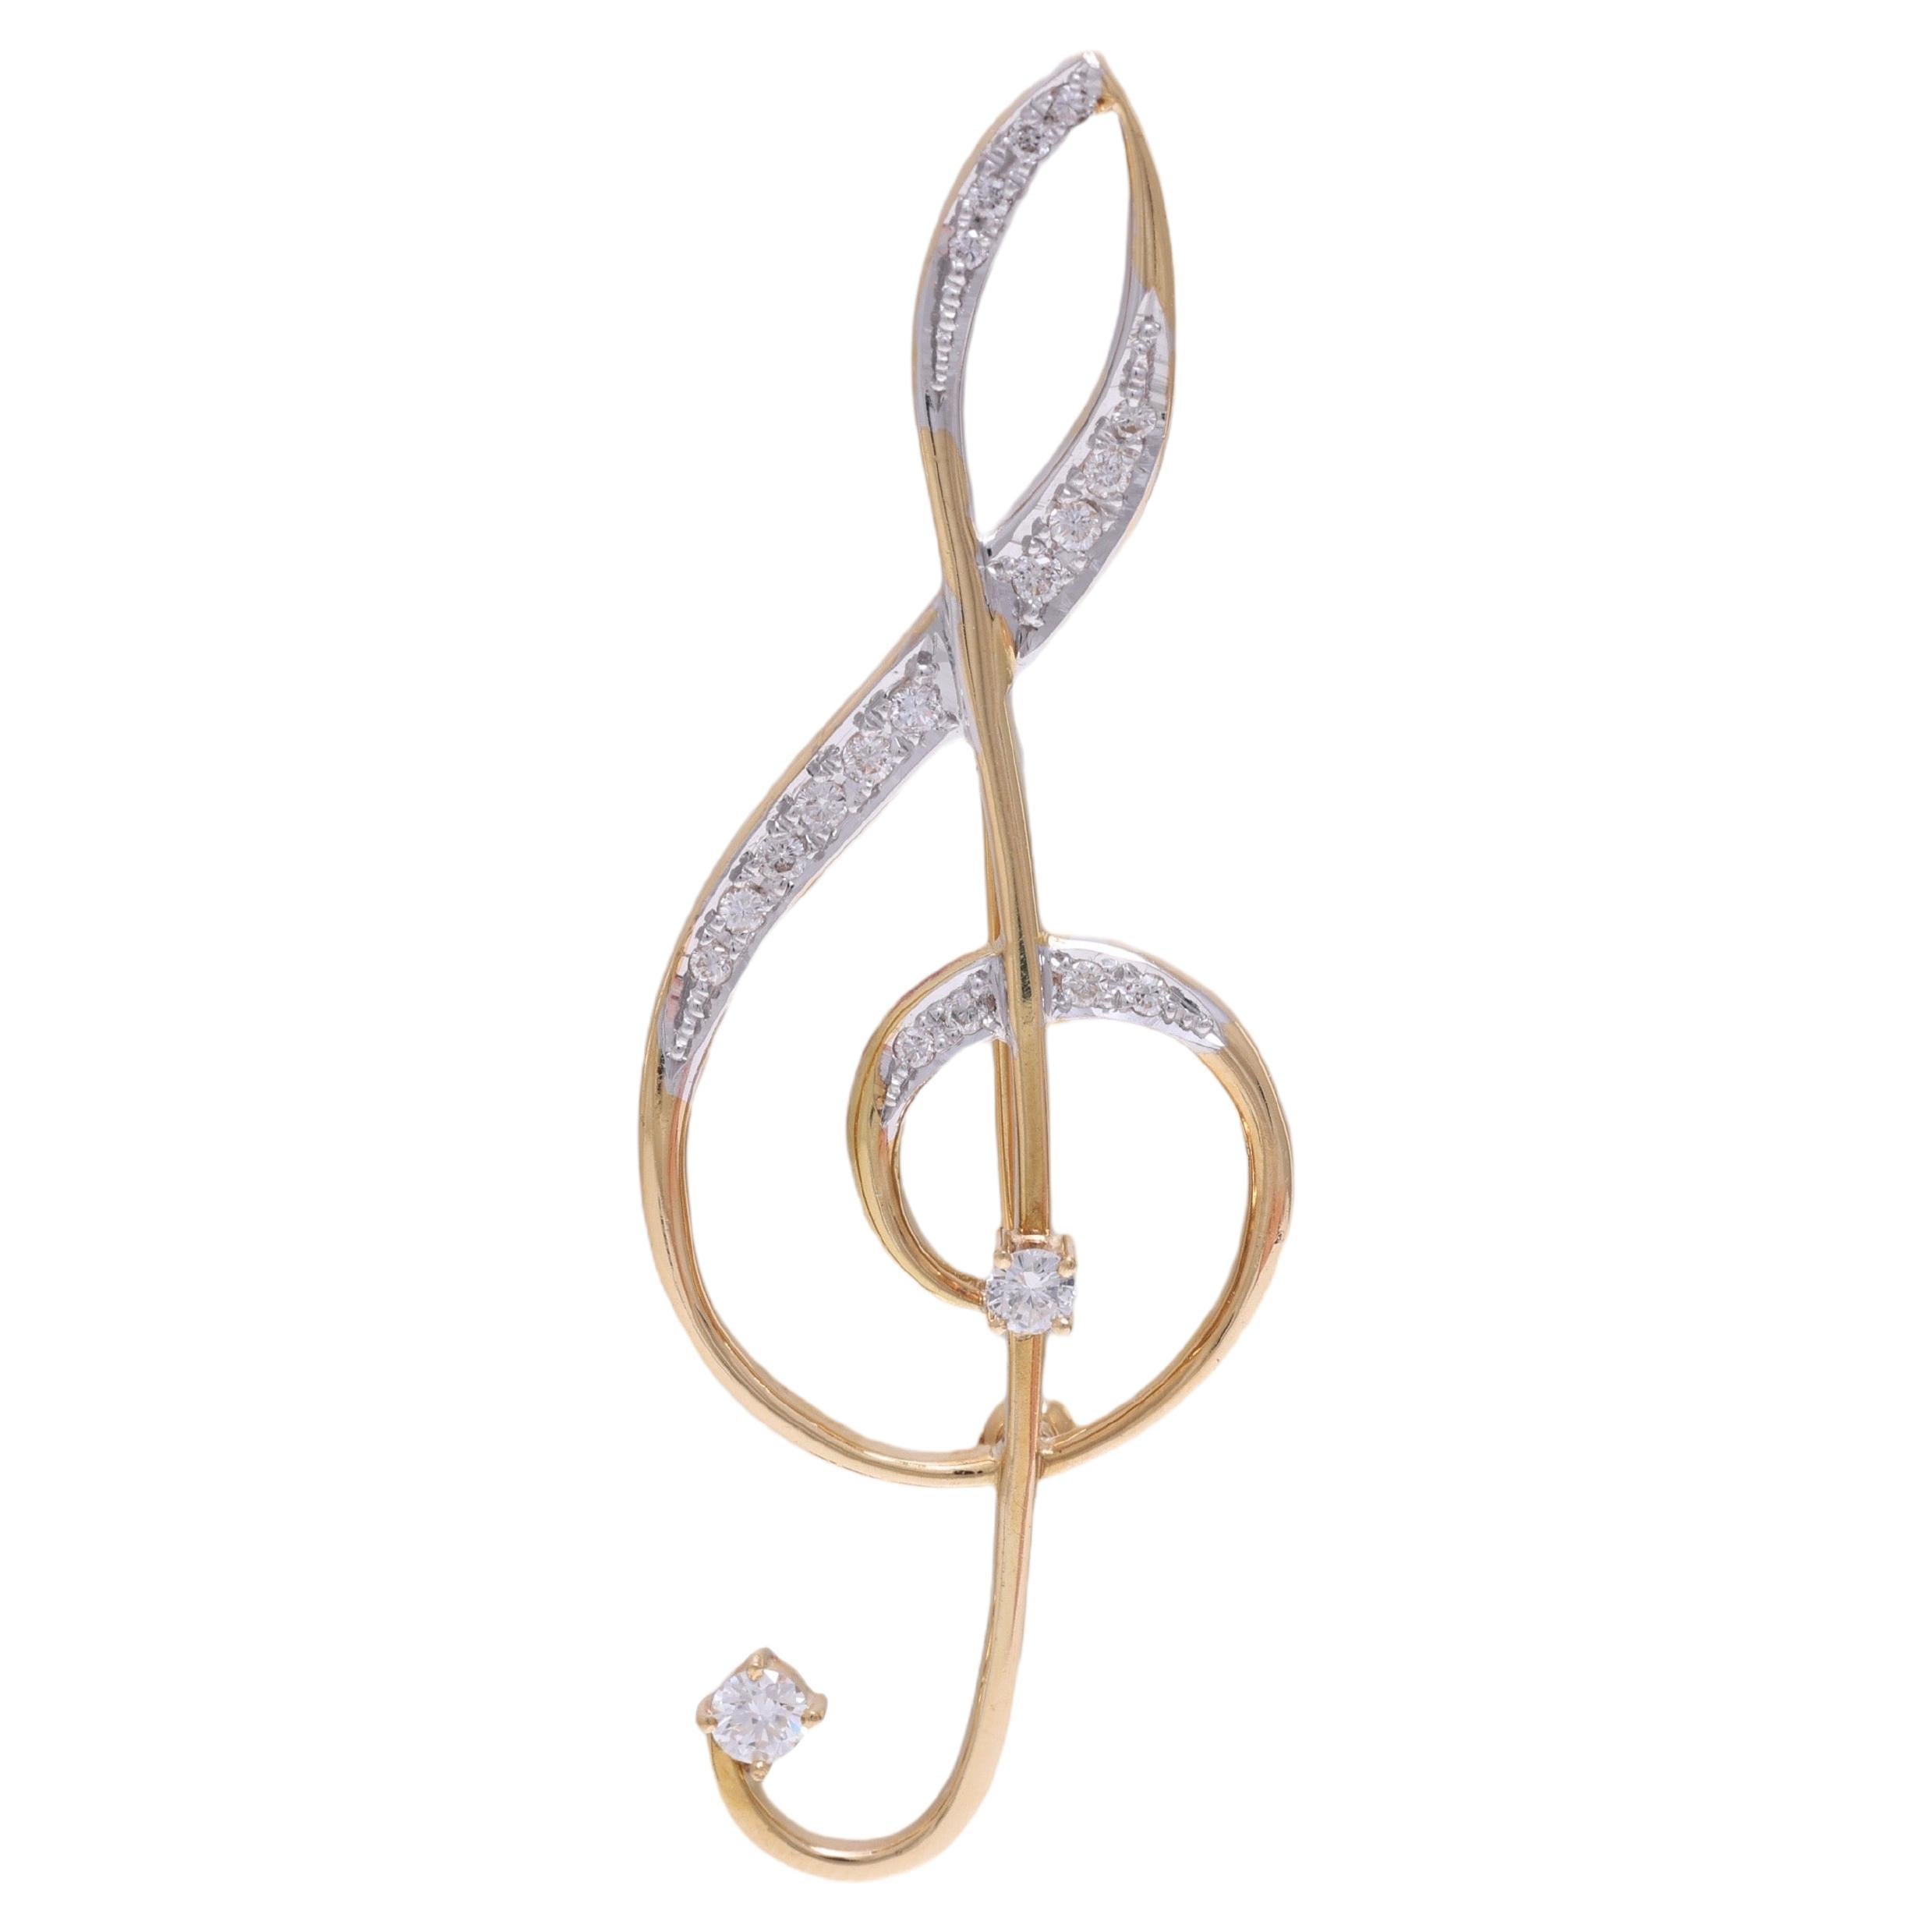 Broche / Pendent-Hanger en forme de note de musique en or jaune 18 carats  Diamants 0,48 carat